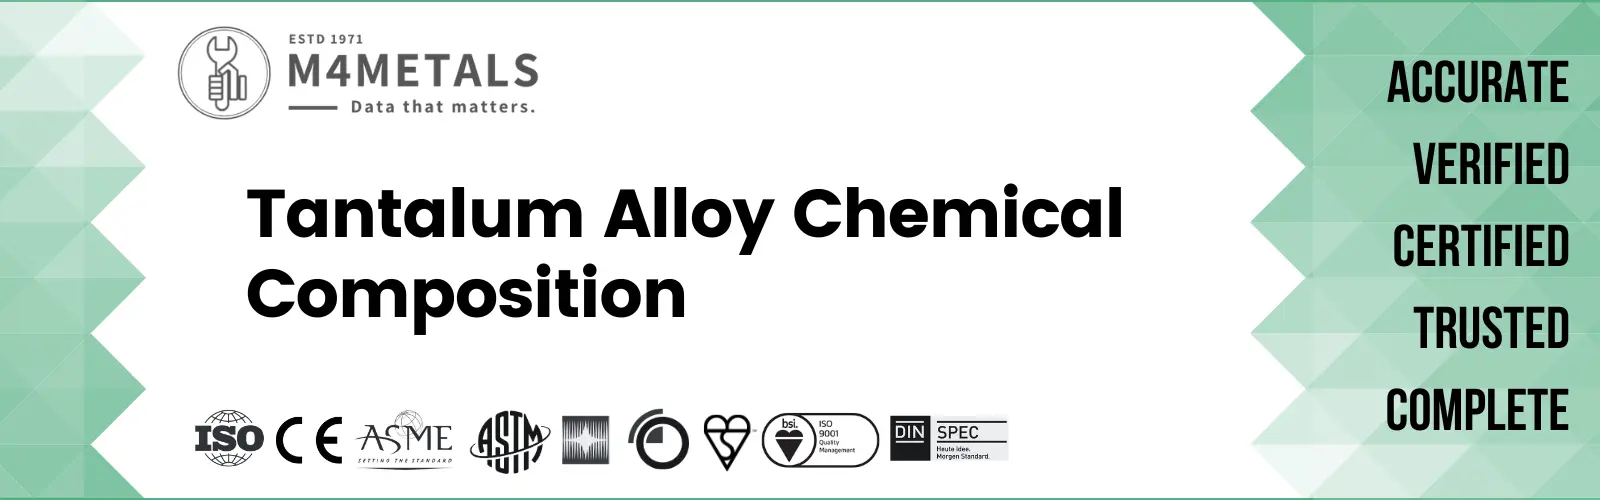 Tantalum Alloy Chemical Composition